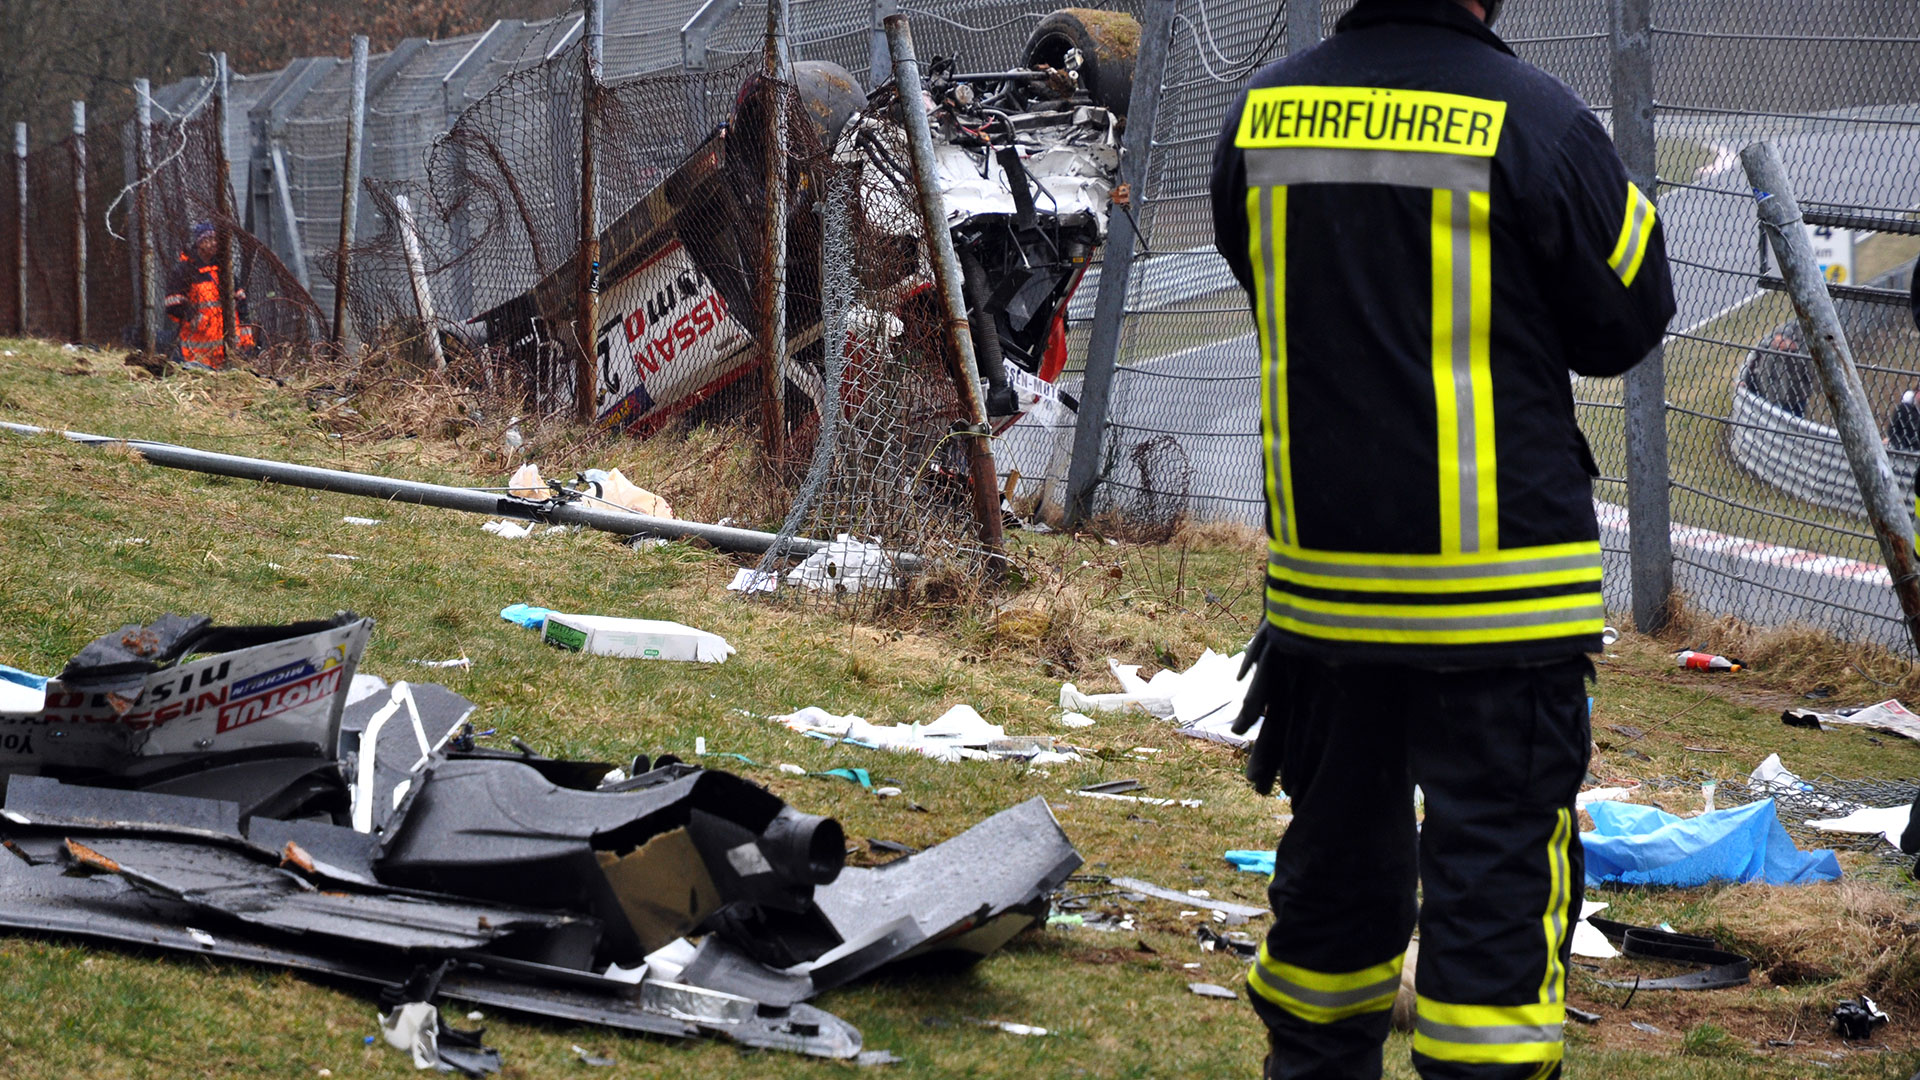 Crash site at Nurburgring Nordschleife in Germany